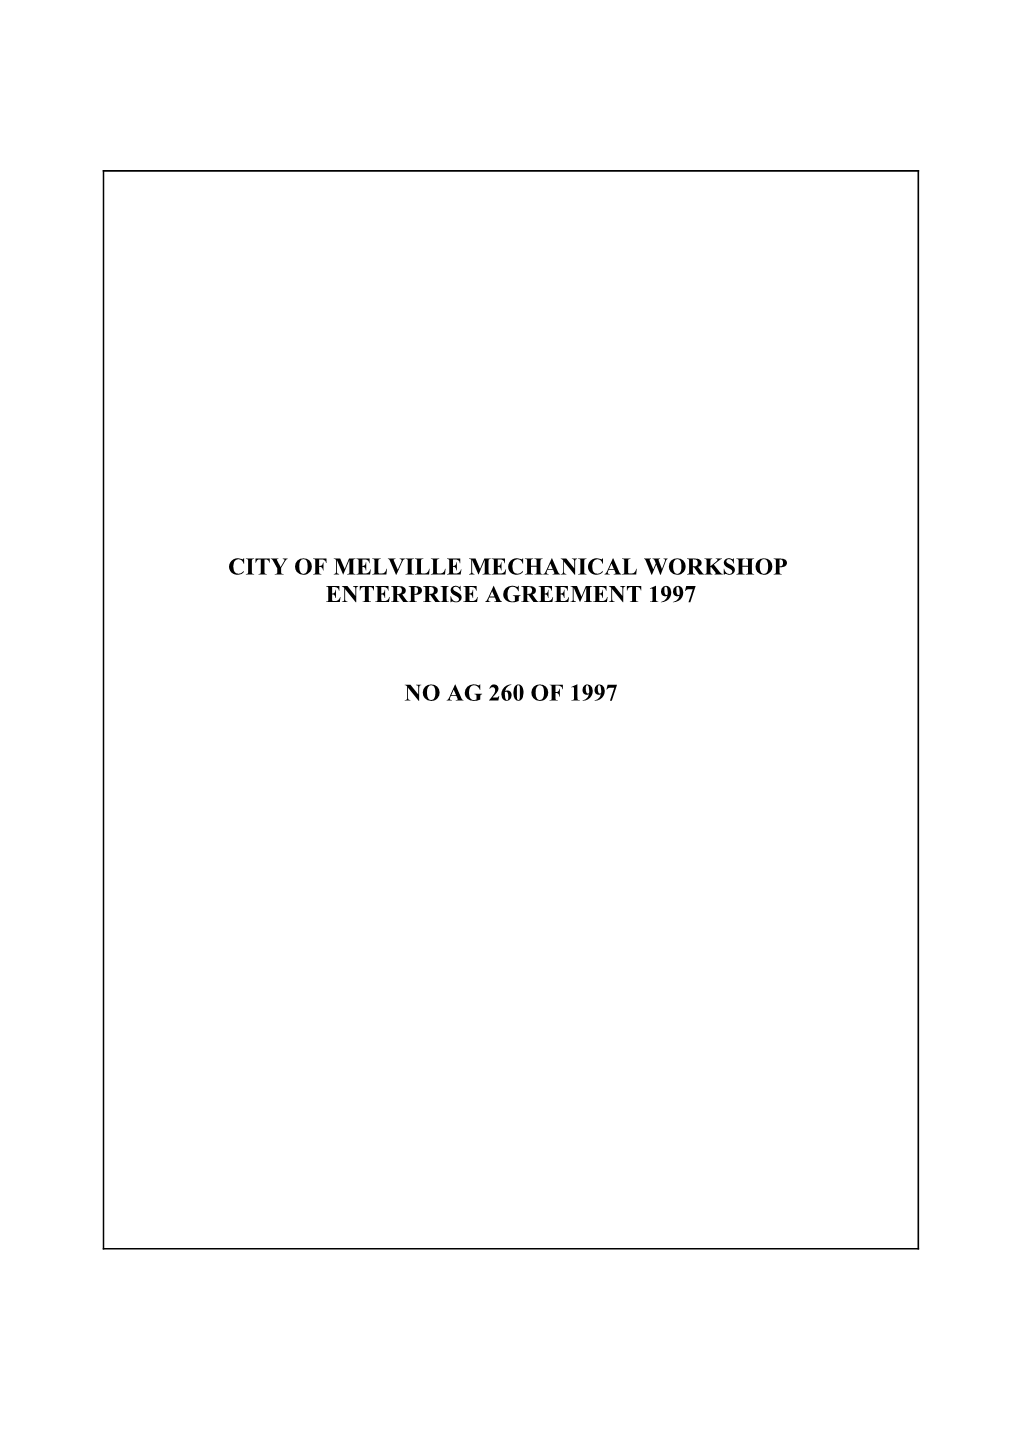 City of Melville Mechanical Workshop Enterprise Agreement 1997